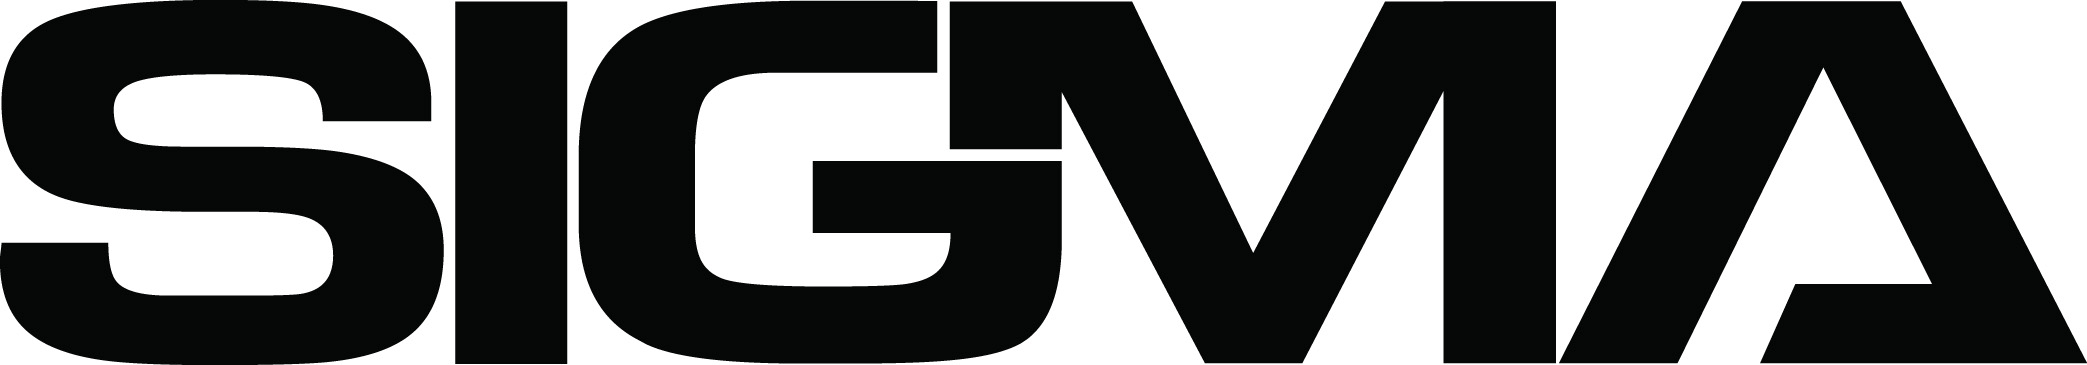 Fake sigma. Sigma logo. Sigma надпись. Sigma бренд логотип. Модельное агентство Сигма лого.